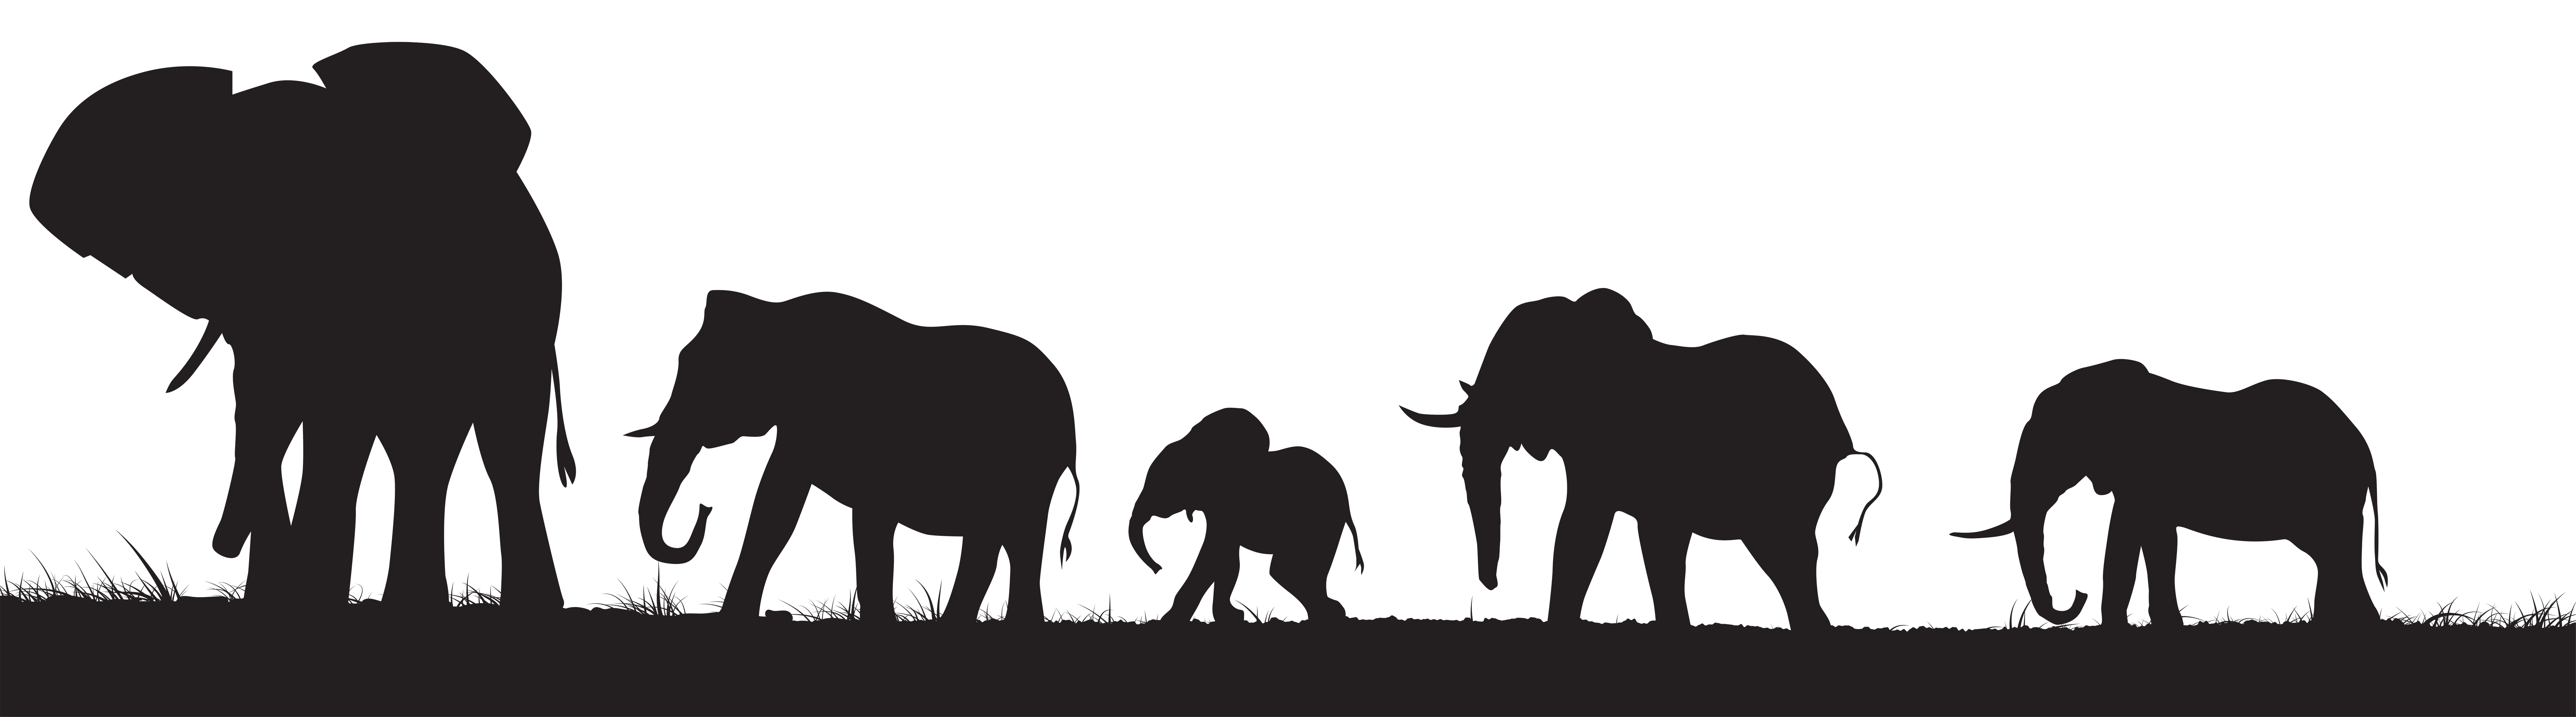 Elephants Silhouette PNG Clip Art Image 